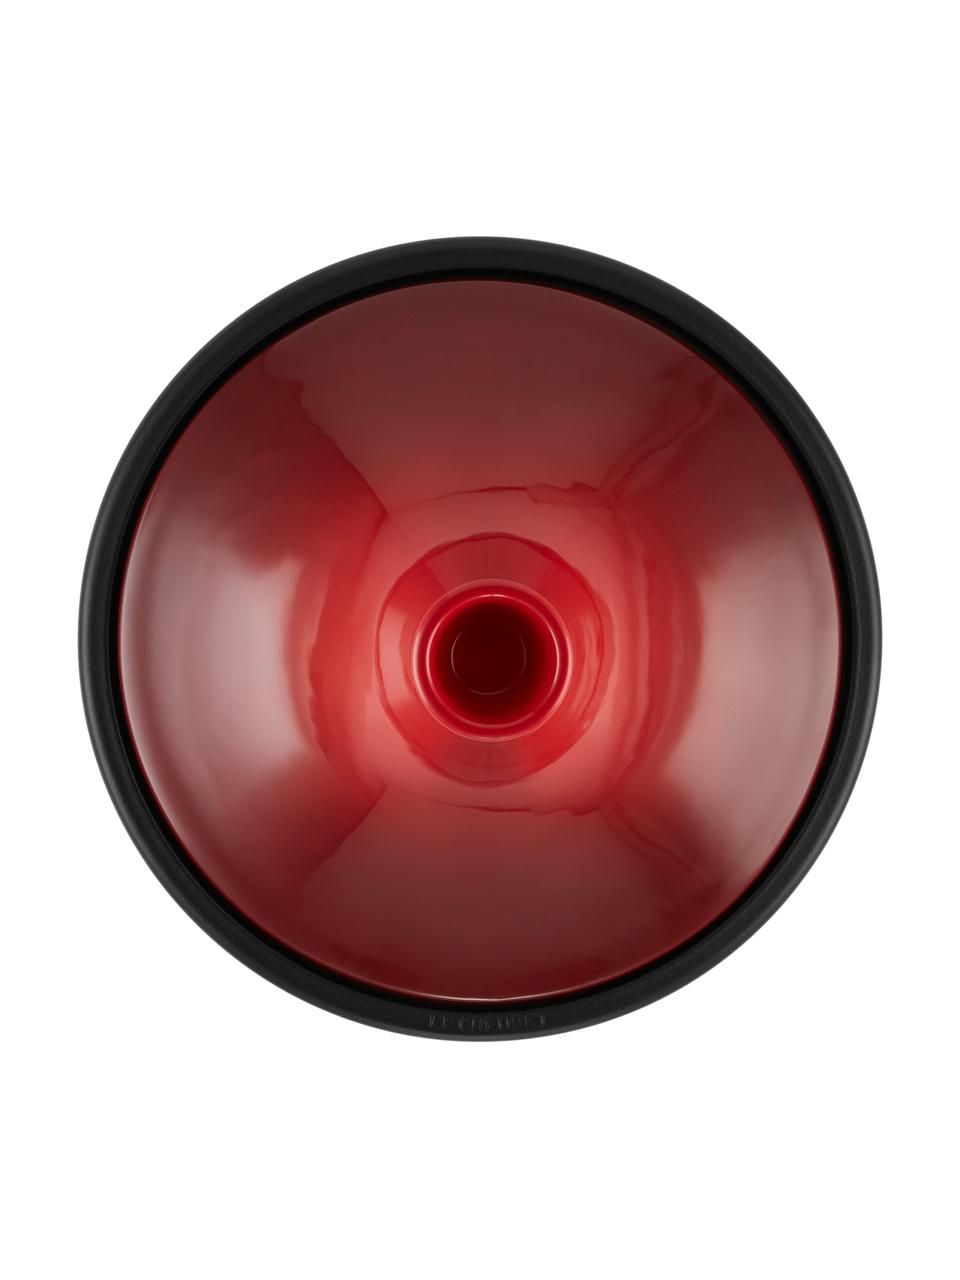 Tagine-Topf Creuset, Deckel: Steingut, Rot, Schwarz, Ø 32 cm x H 31 cm, 3.7 L